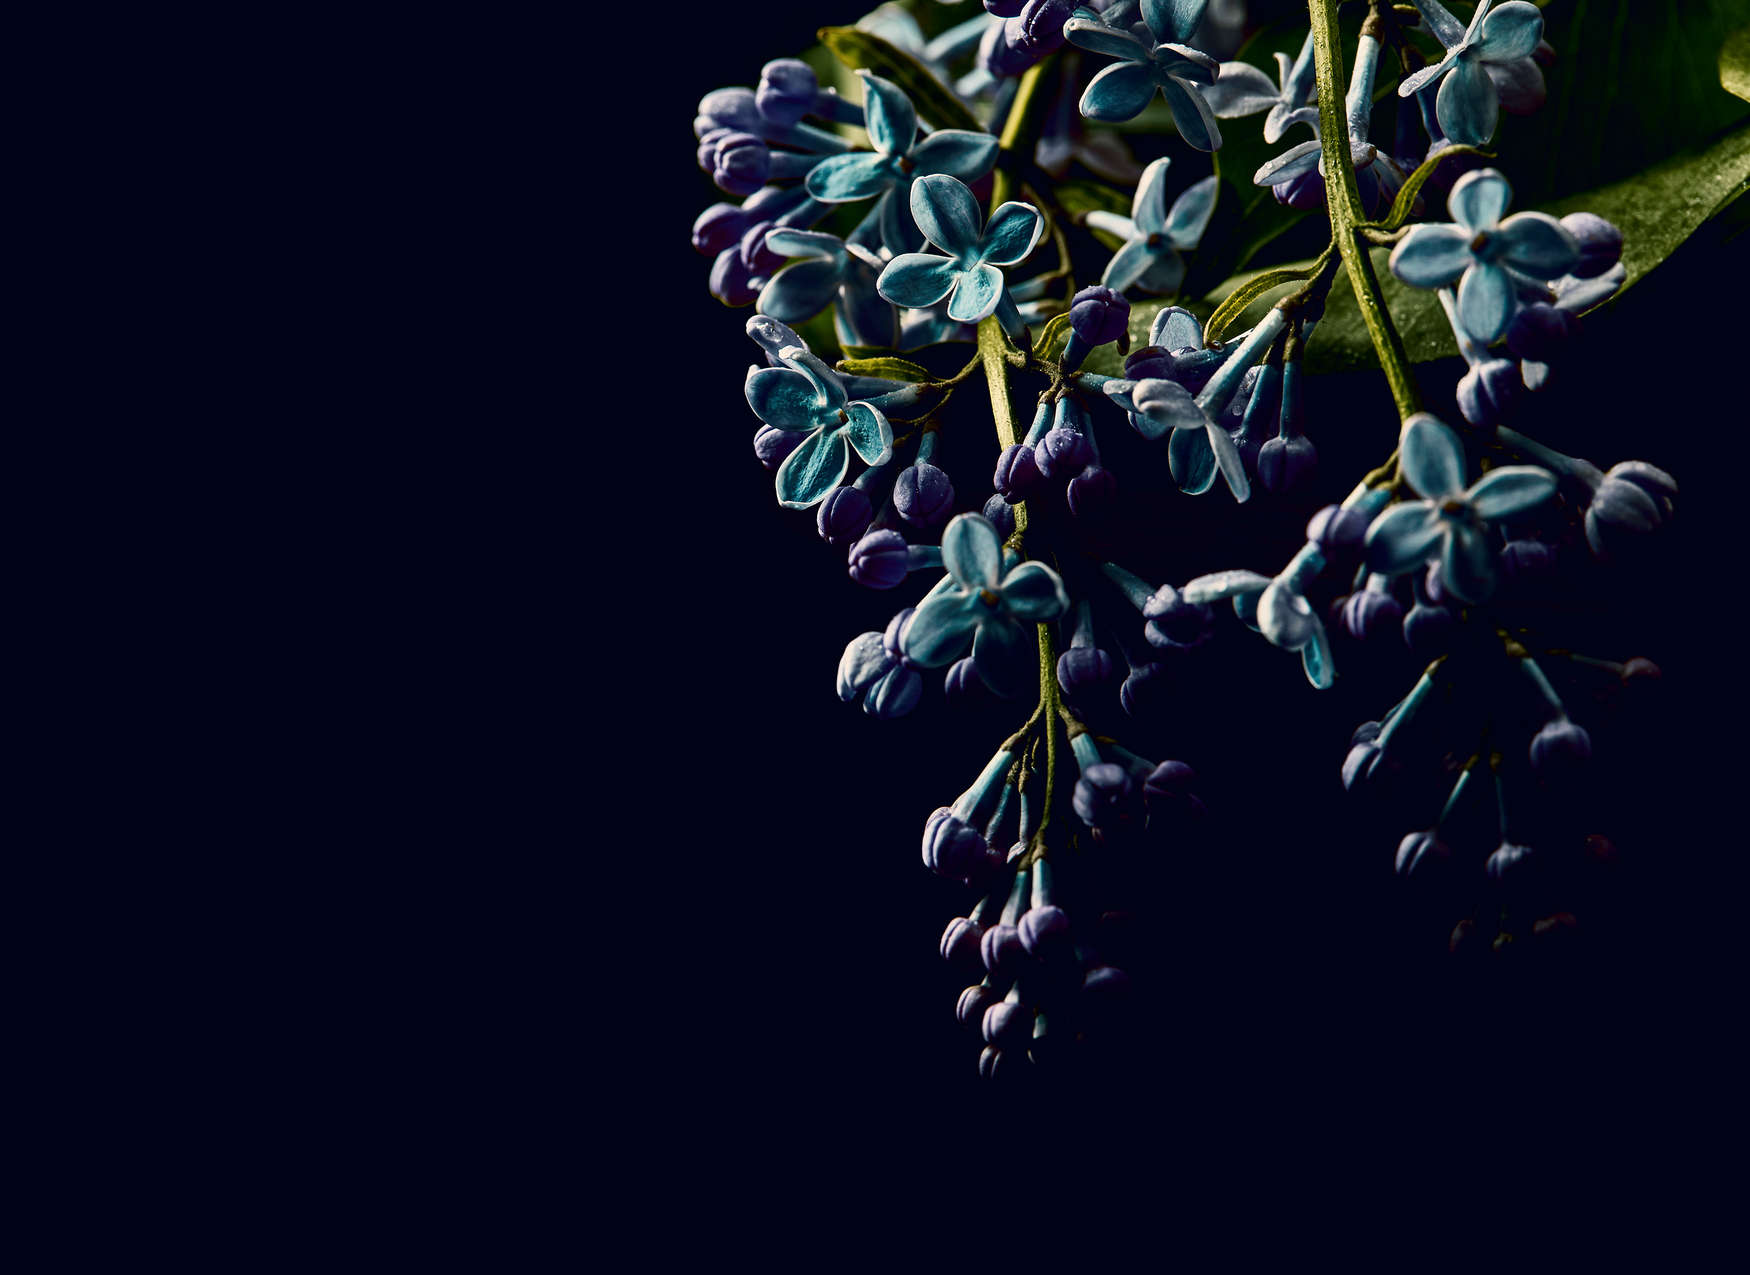             Digital behang Bloemrijk op Zwarte Achtergrond Close-Up - Blauw, Groen, Zwart
        